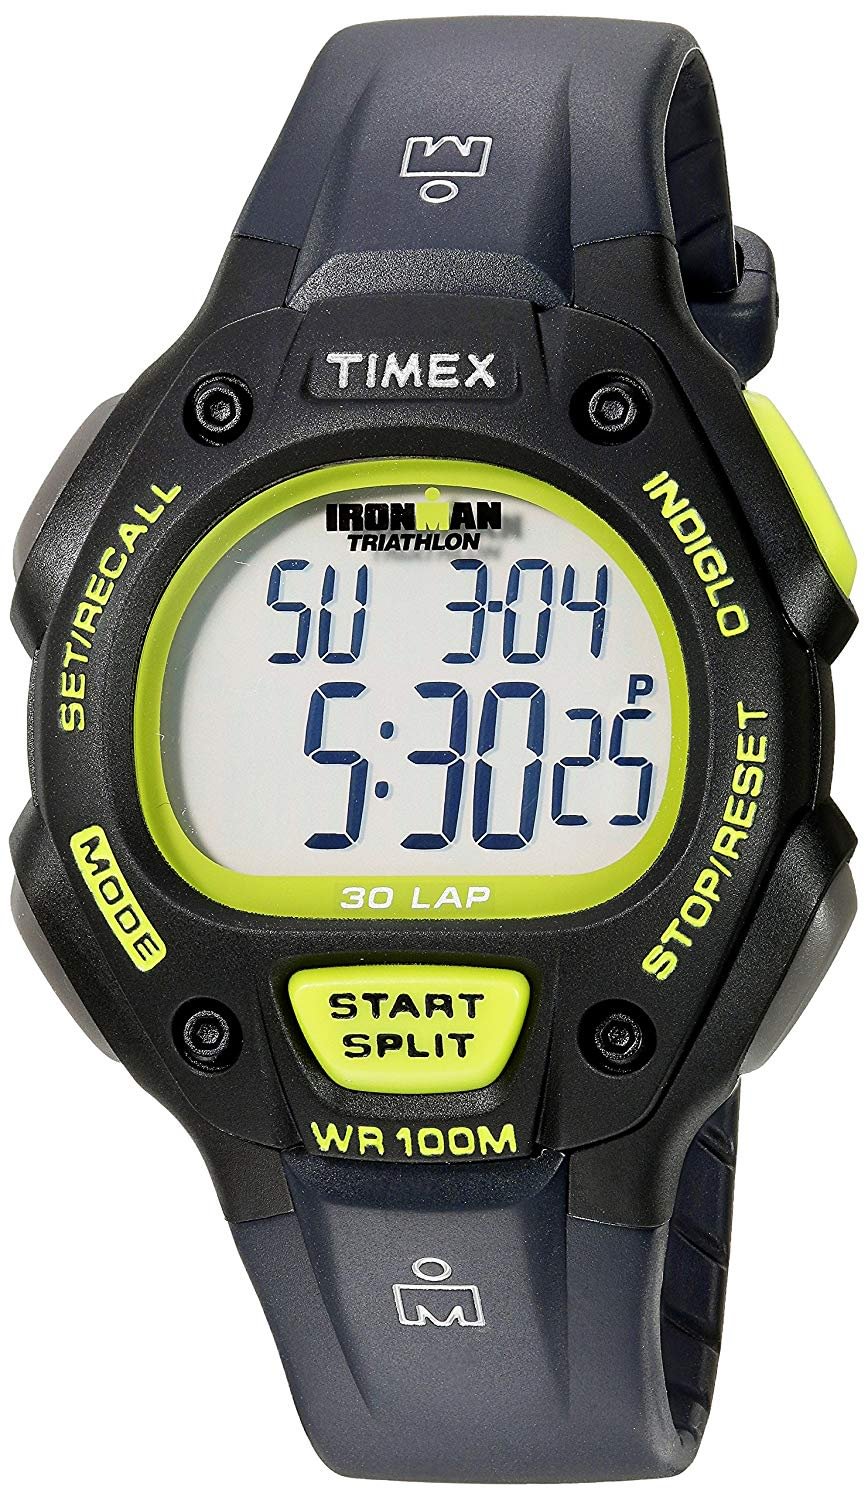 Timex Ironman Classic 30 Full-Size Watch